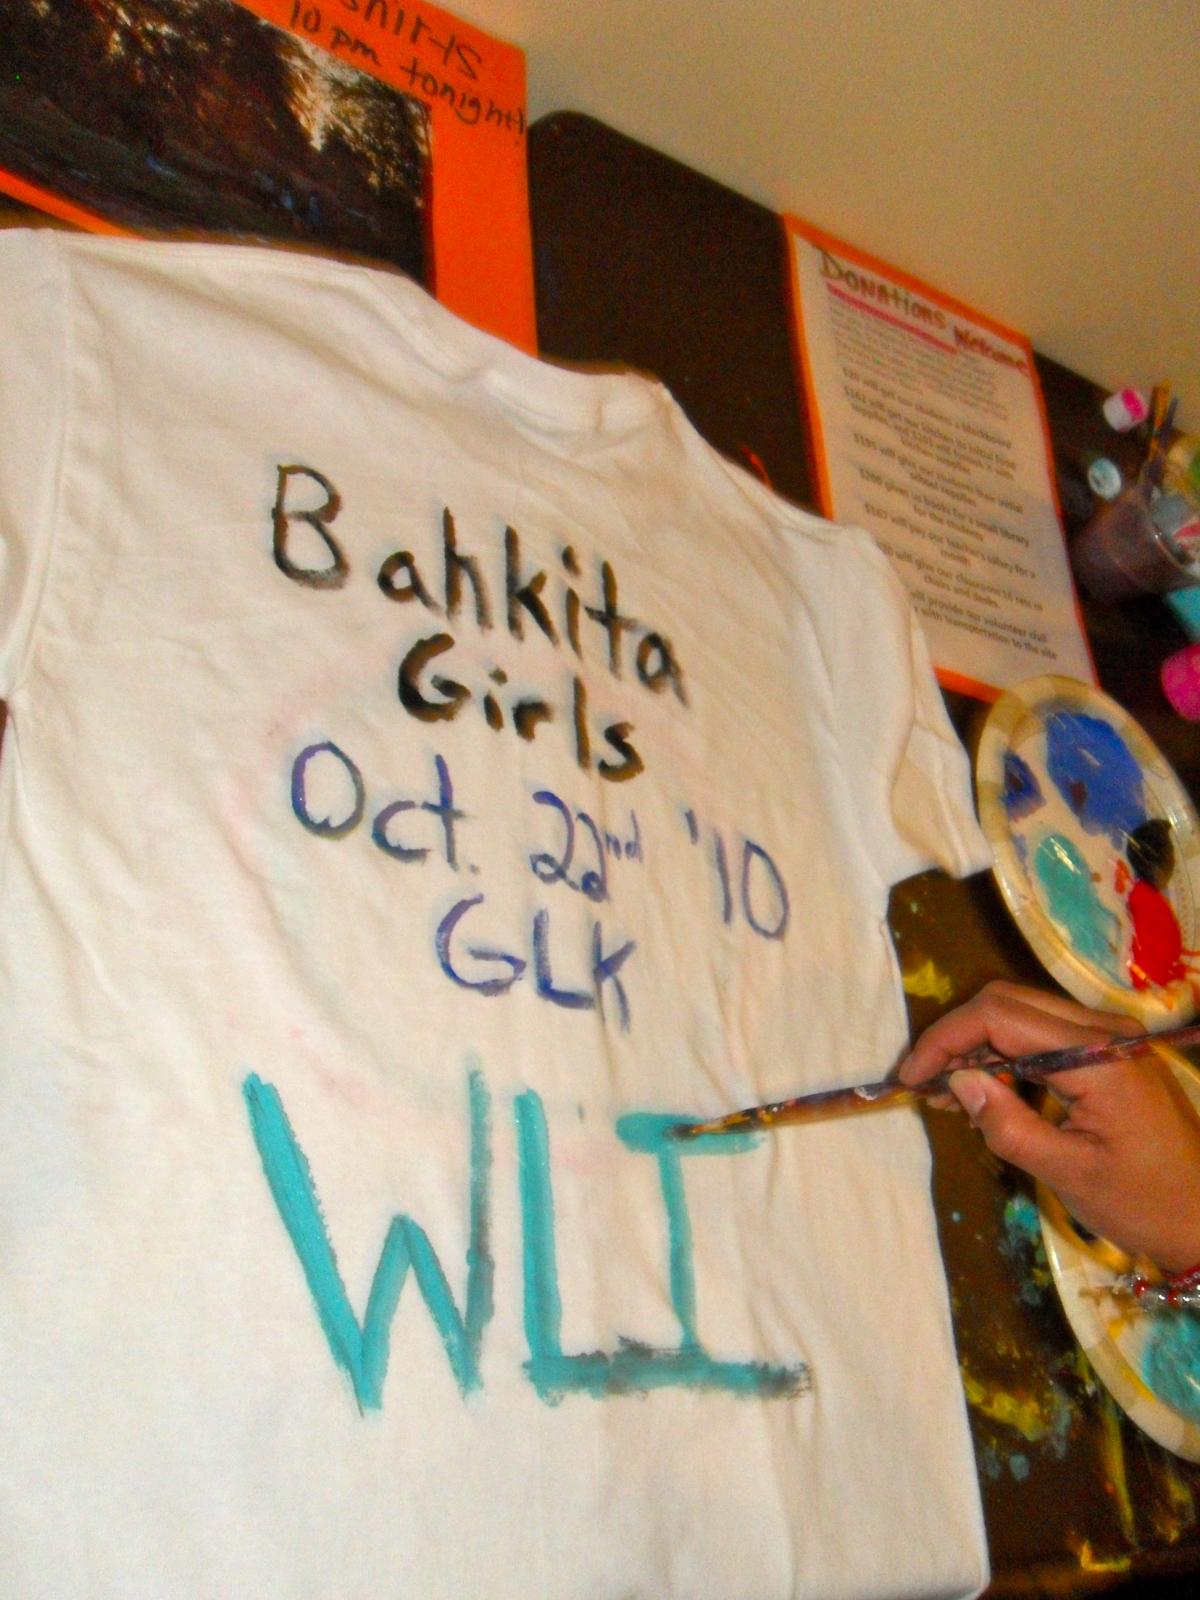 Person painting Bahkita Girls shirt